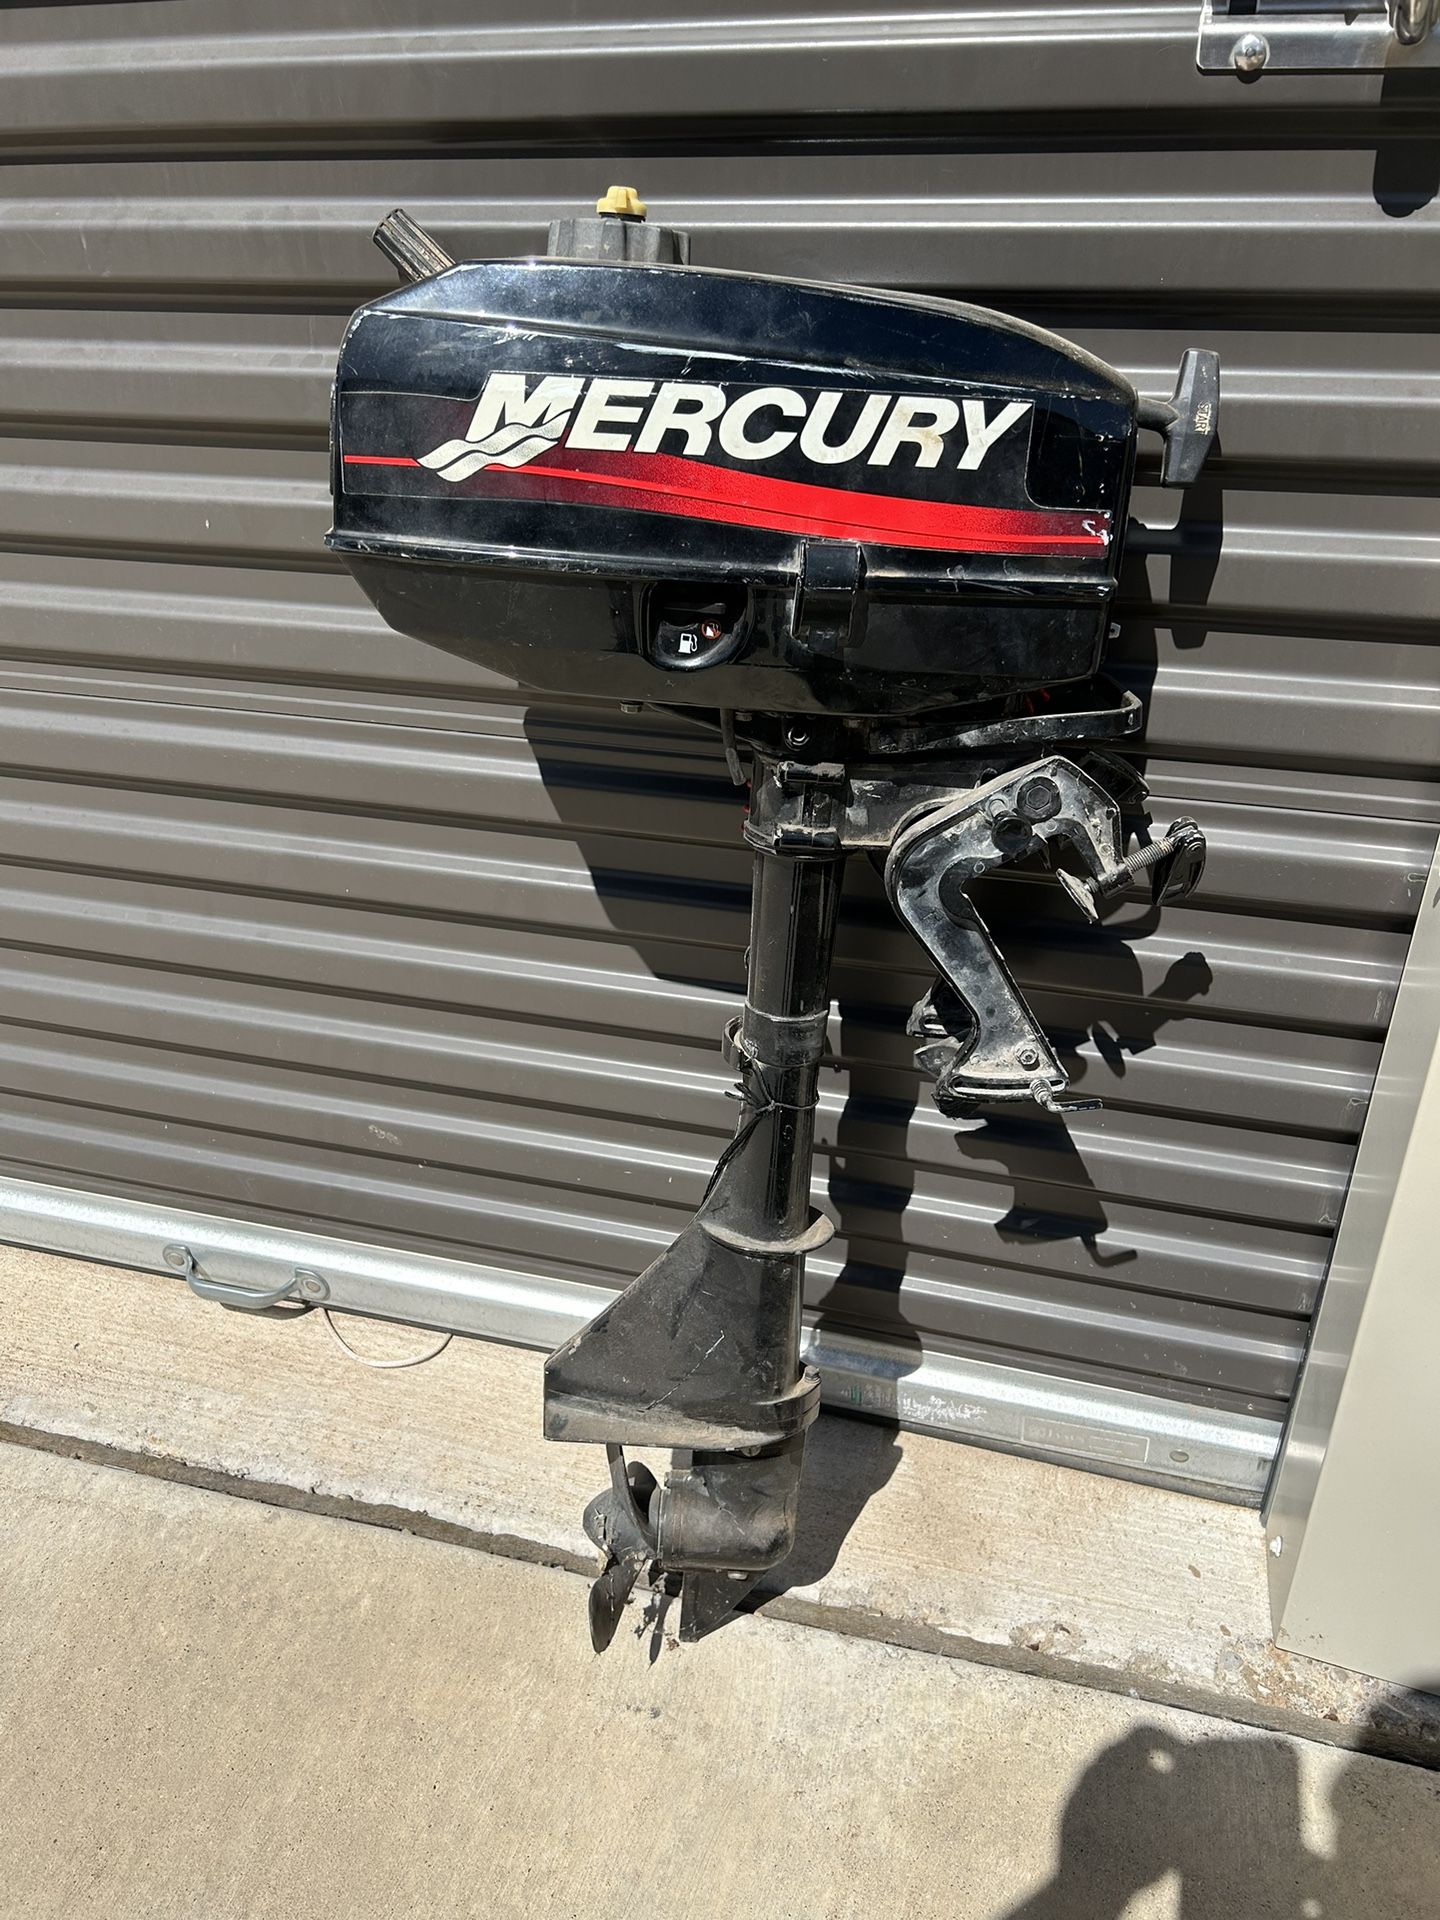 Mercury Outboard